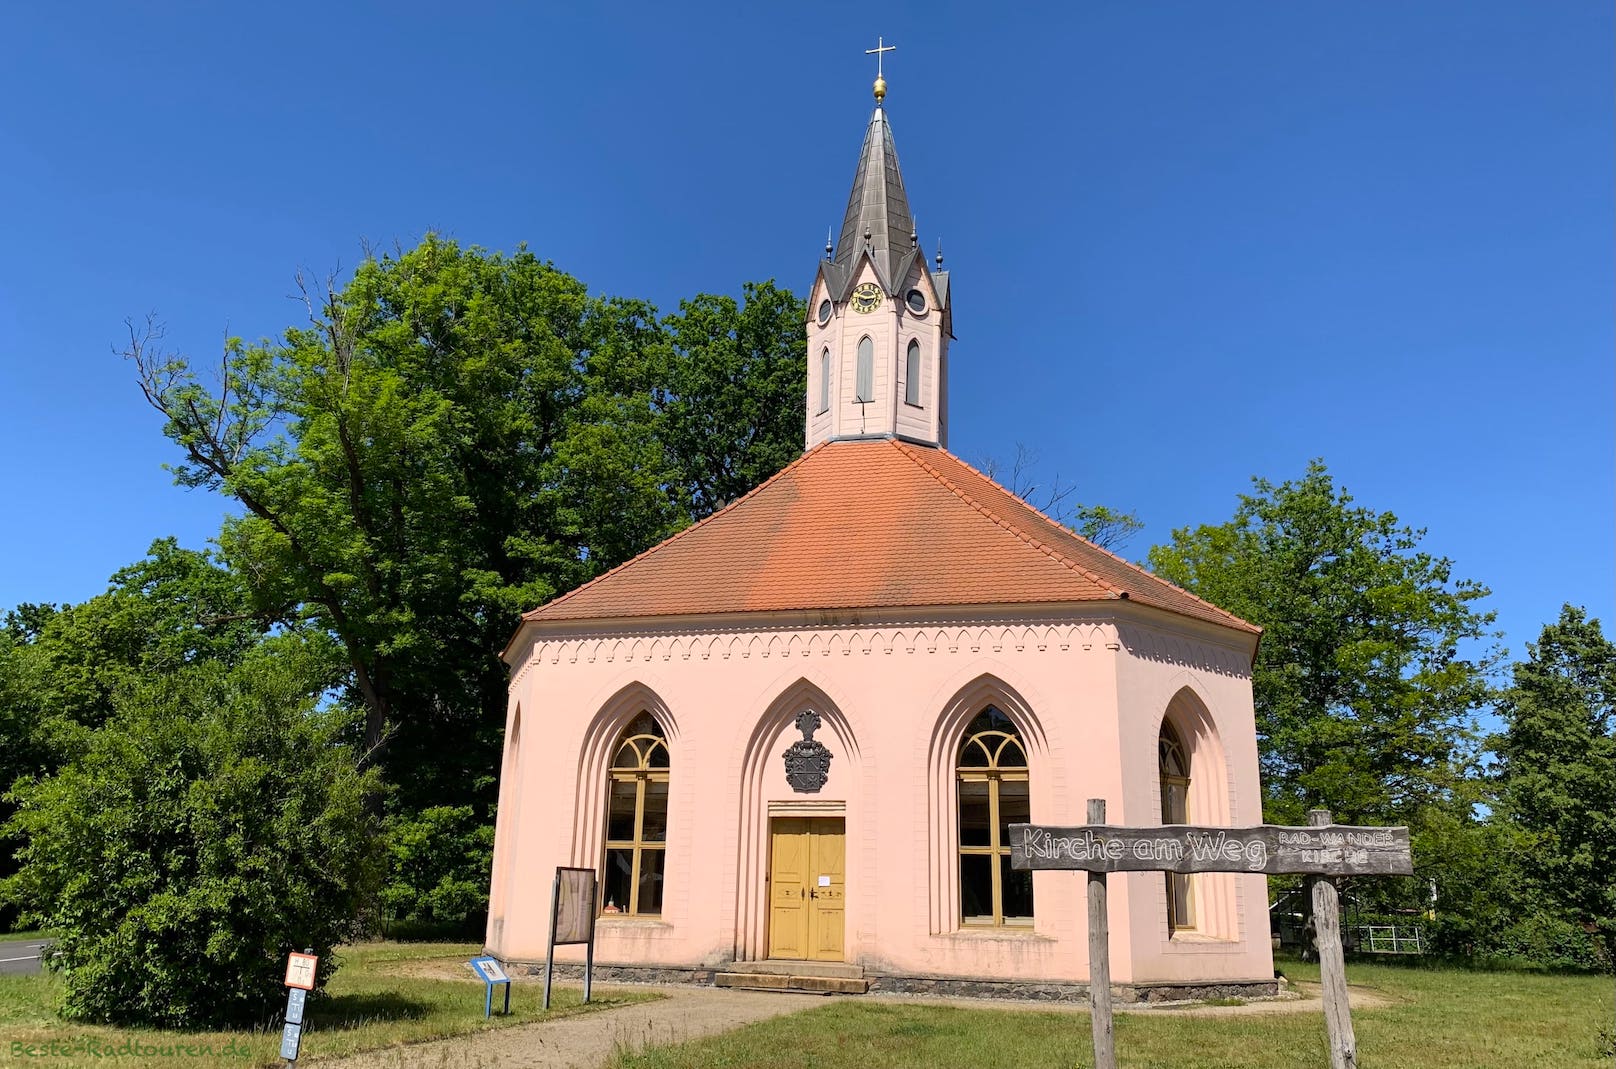 Foto vom Berlin-Kopenhagen-Radweg, Havelradweg und Naturparktour aus: Radwander-Kirche in Dannenwalde (Oberhavel), Kirche am Weg